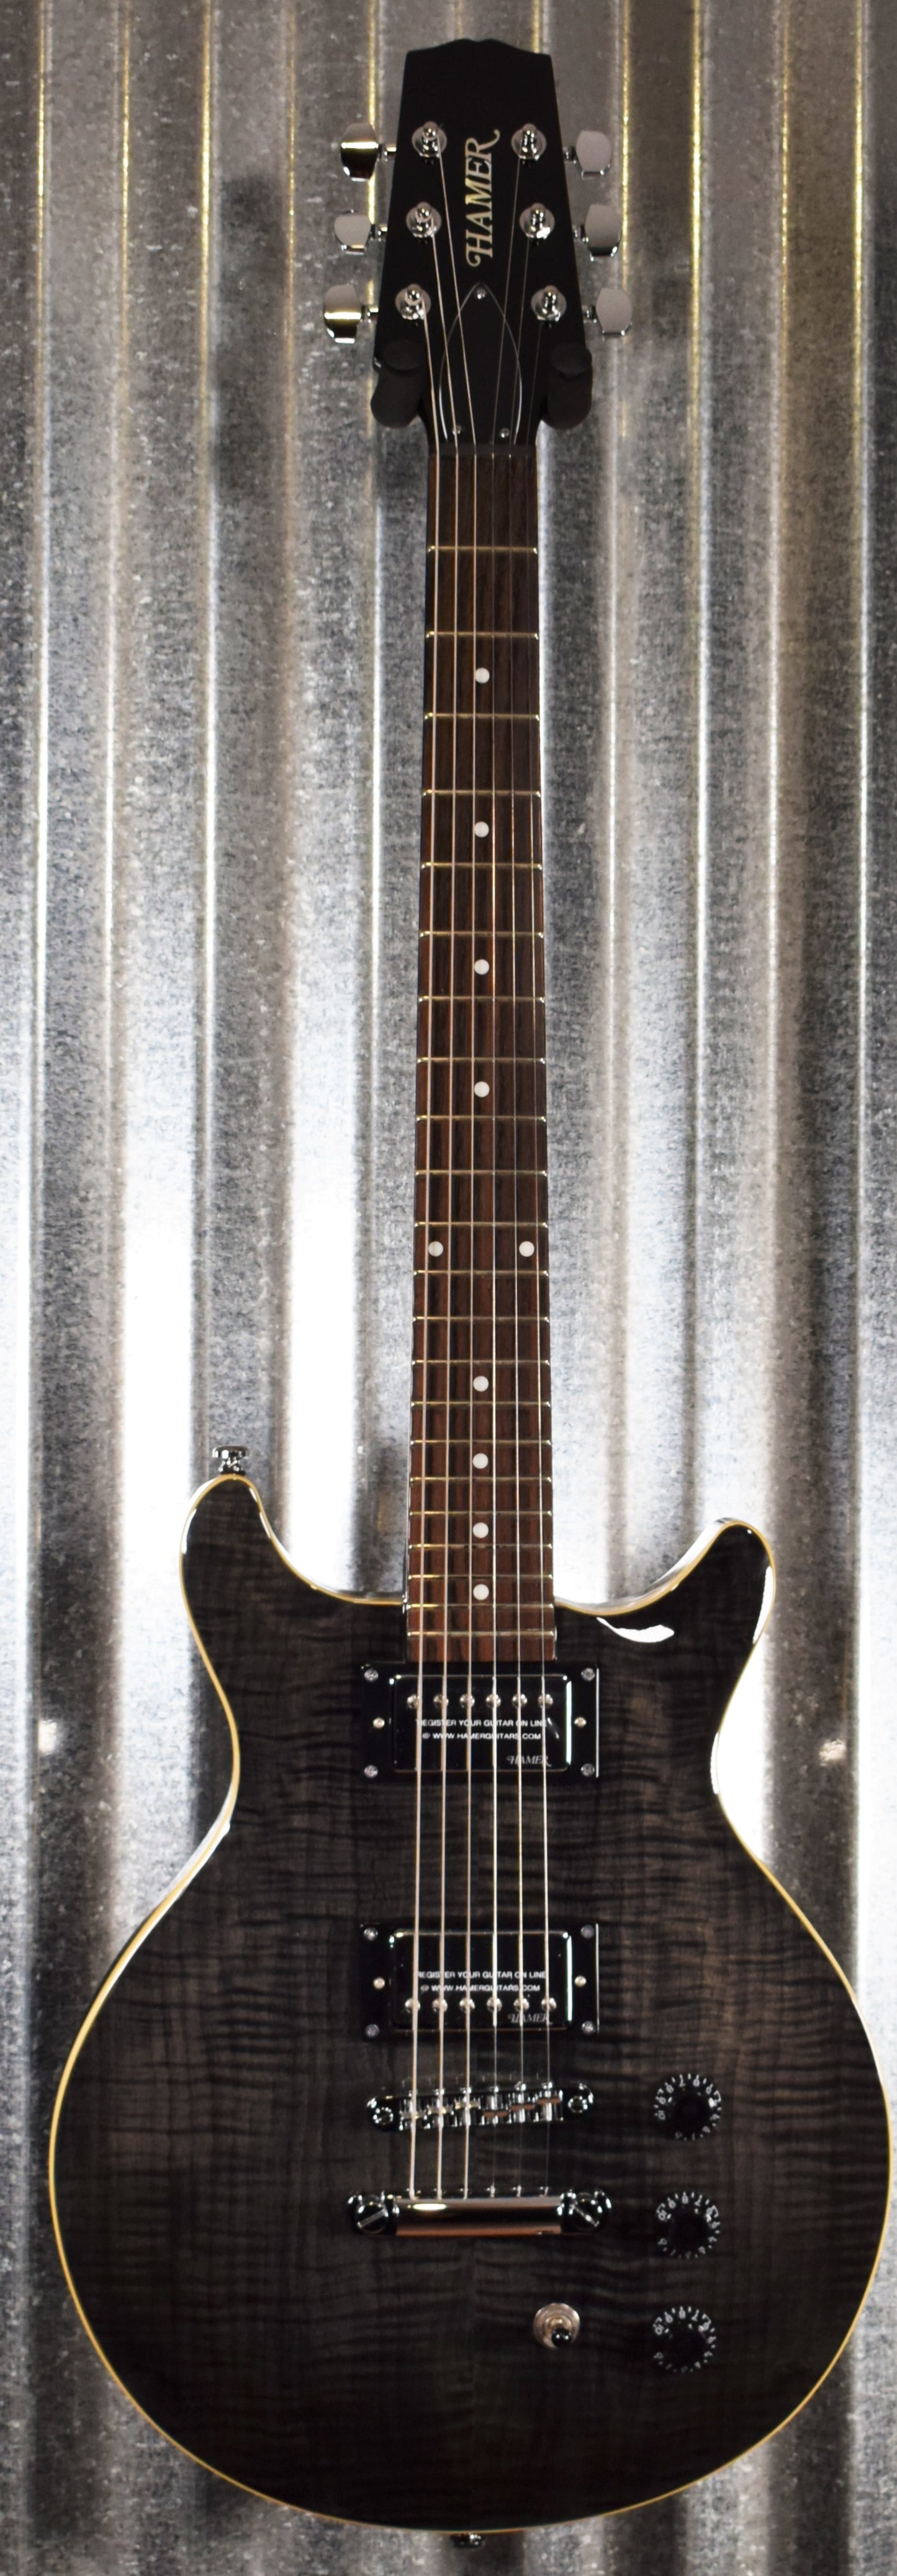 Hamer Archtop Flame Trans Black Double Cut Guitar SATF-TBK #0193